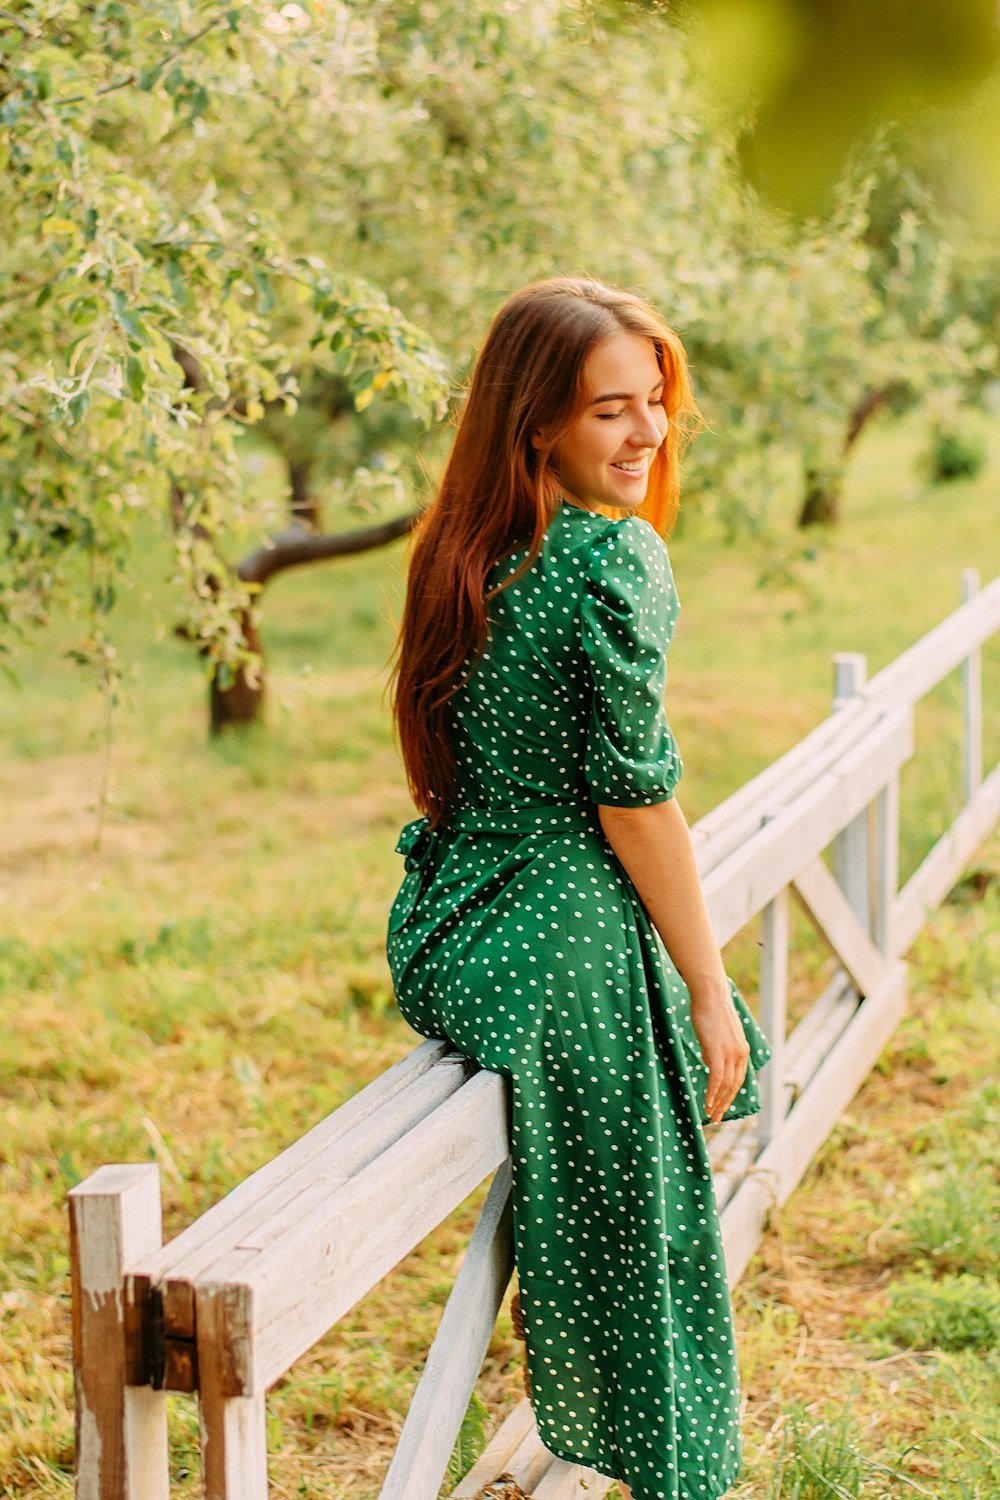 woman in green dress standing on wooden bridge